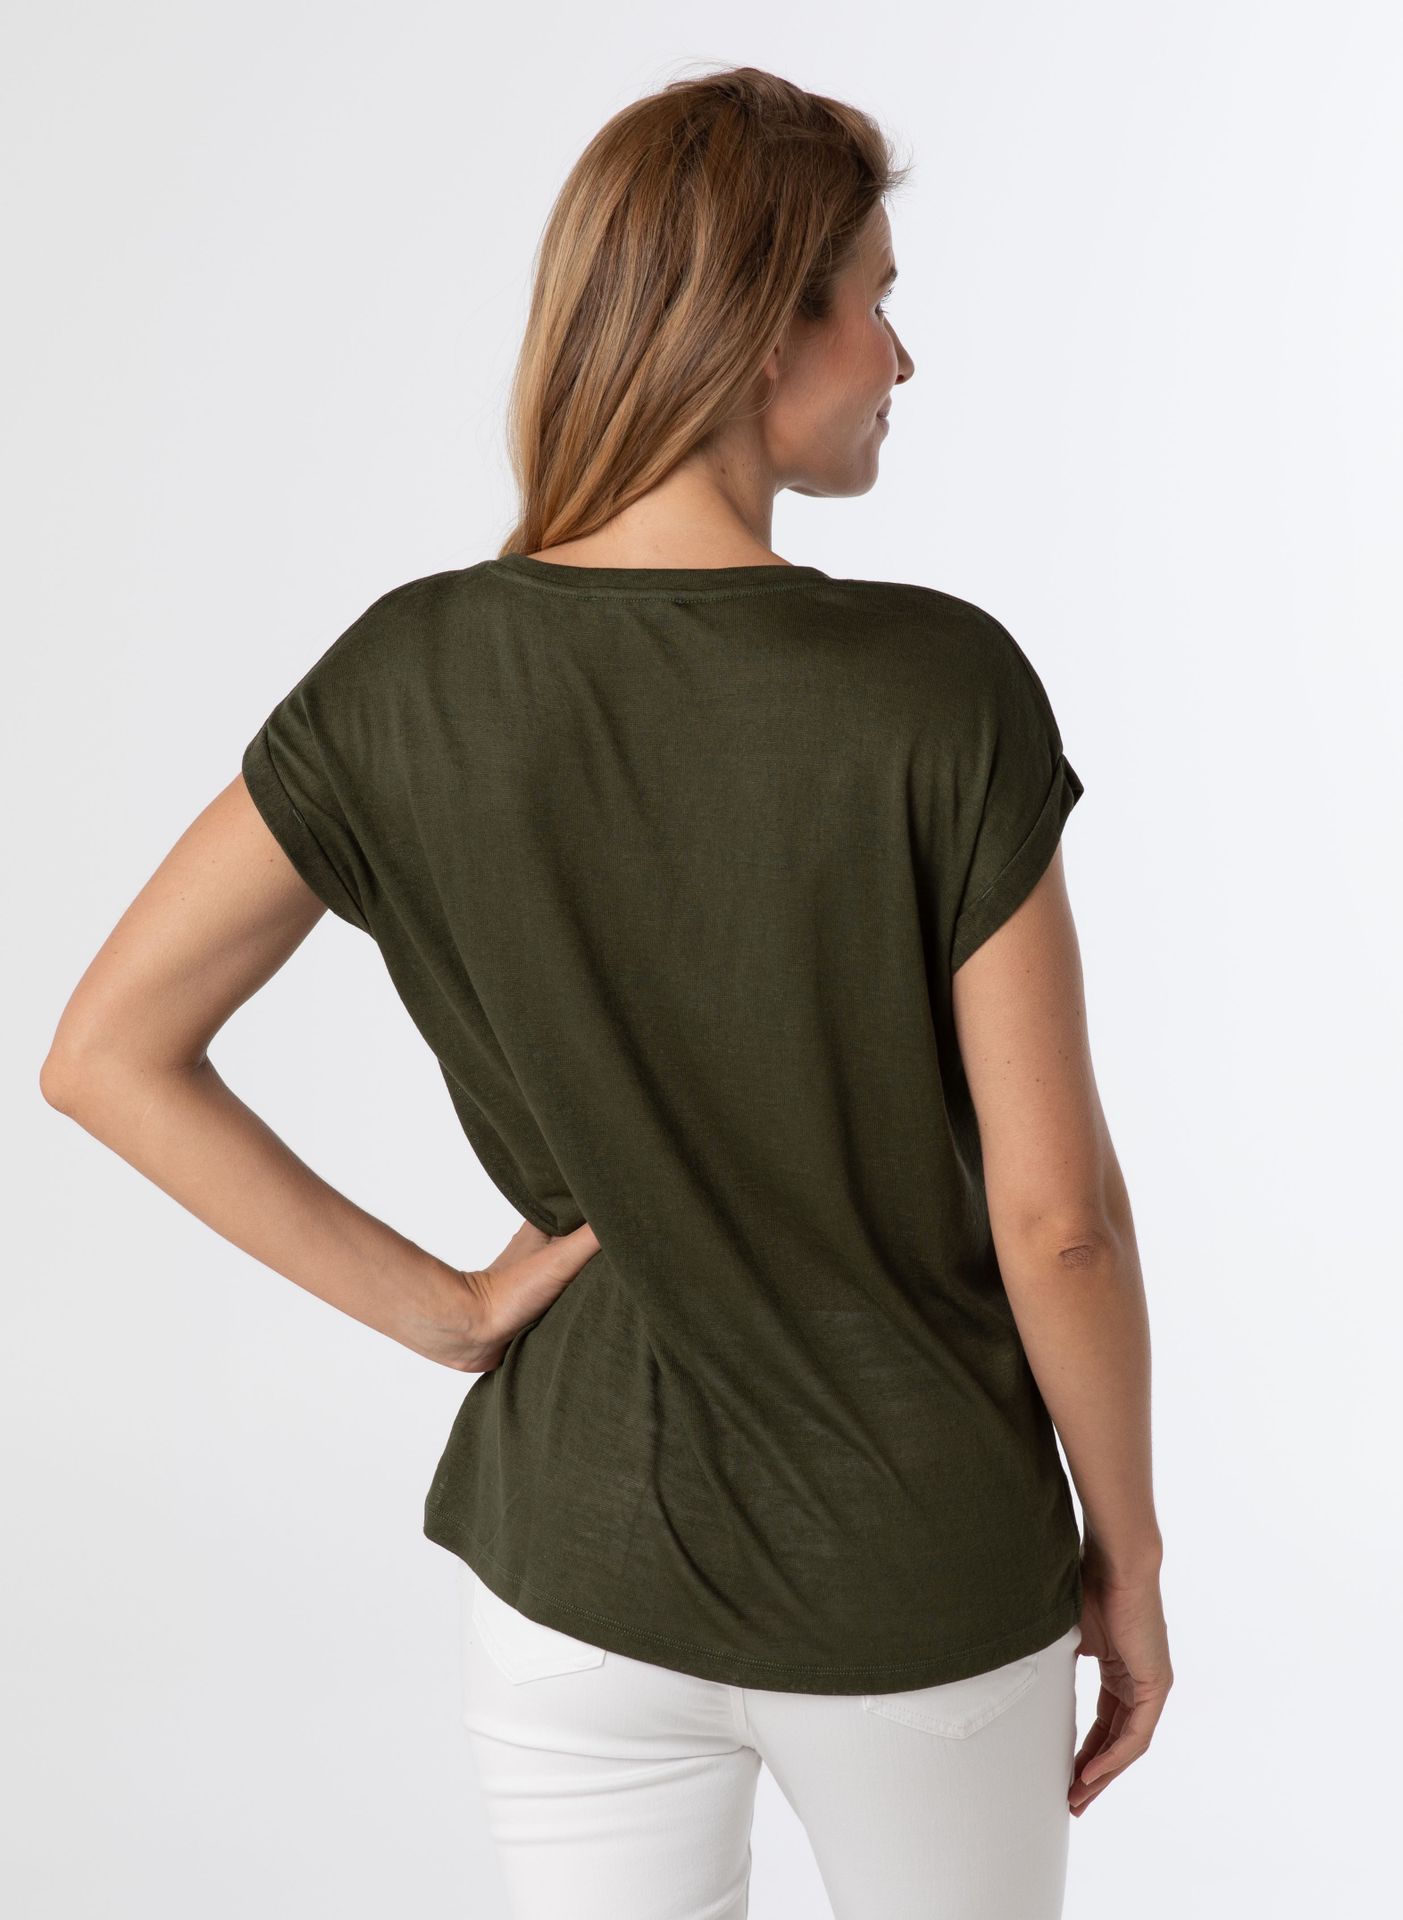 Norah Shirt groen dark army 211185-580